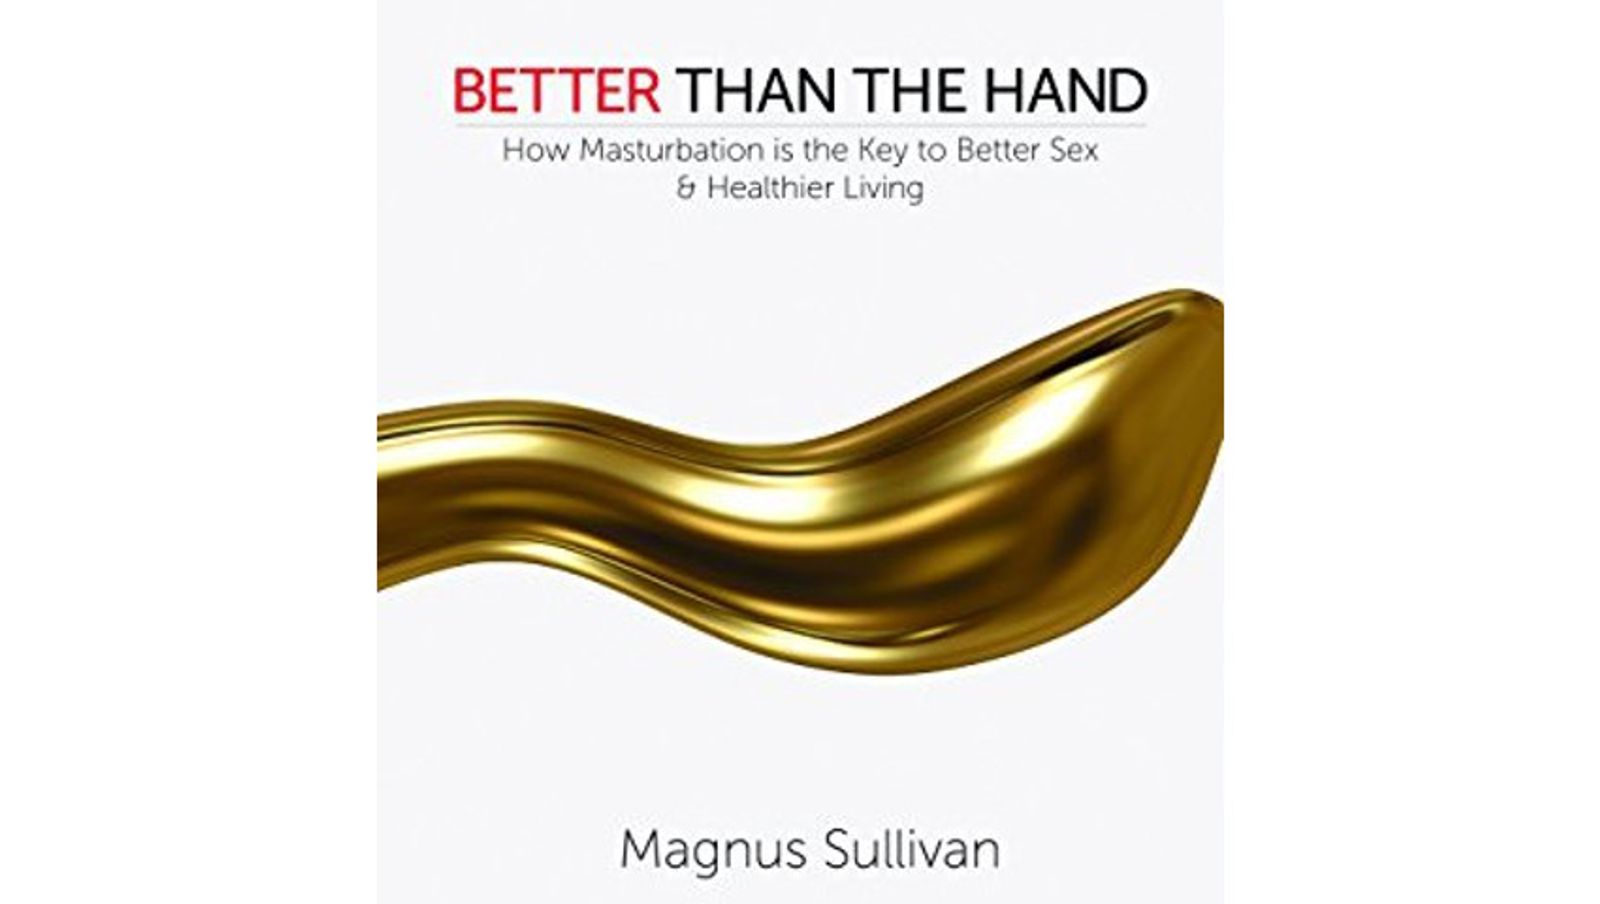 Masturbation is Key to Better Sex,  Says Magnus Sullivan in New Book  